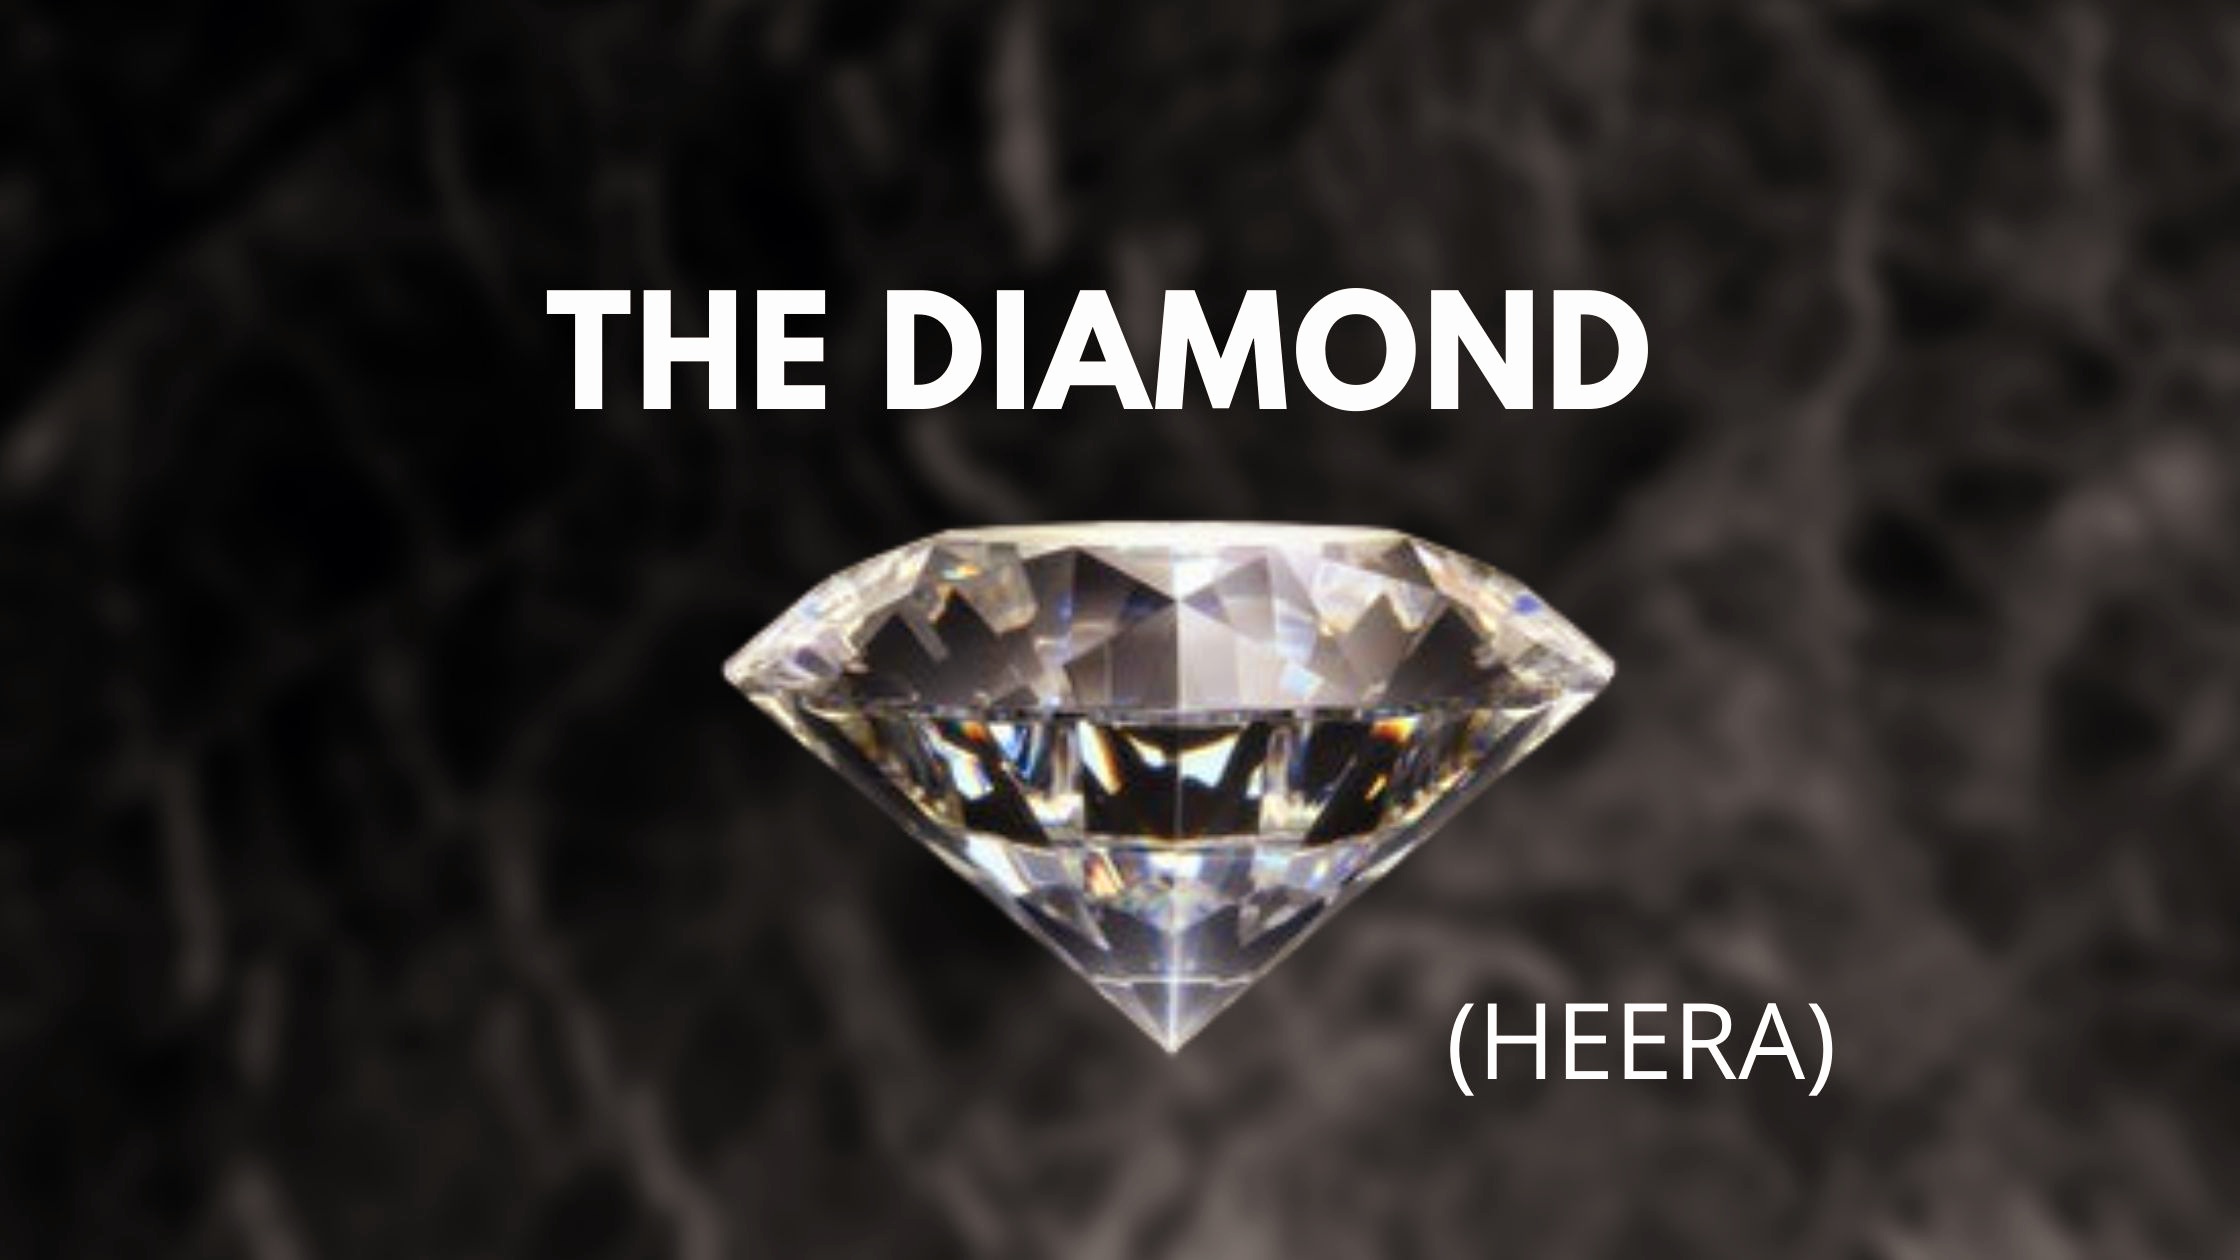 THE DIAMOND (HEERA)